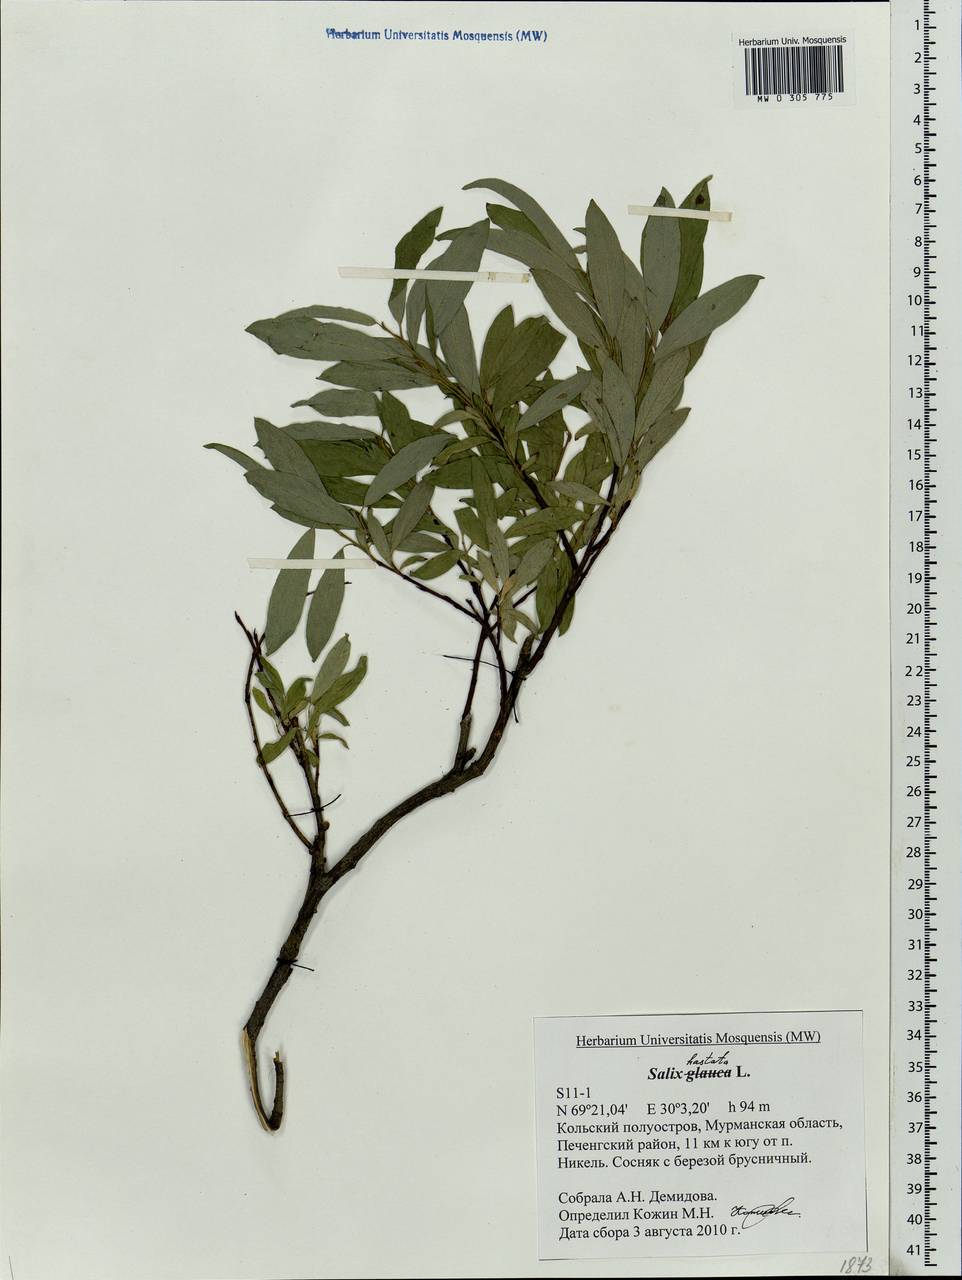 Salix hastata L., Eastern Europe, Northern region (E1) (Russia)